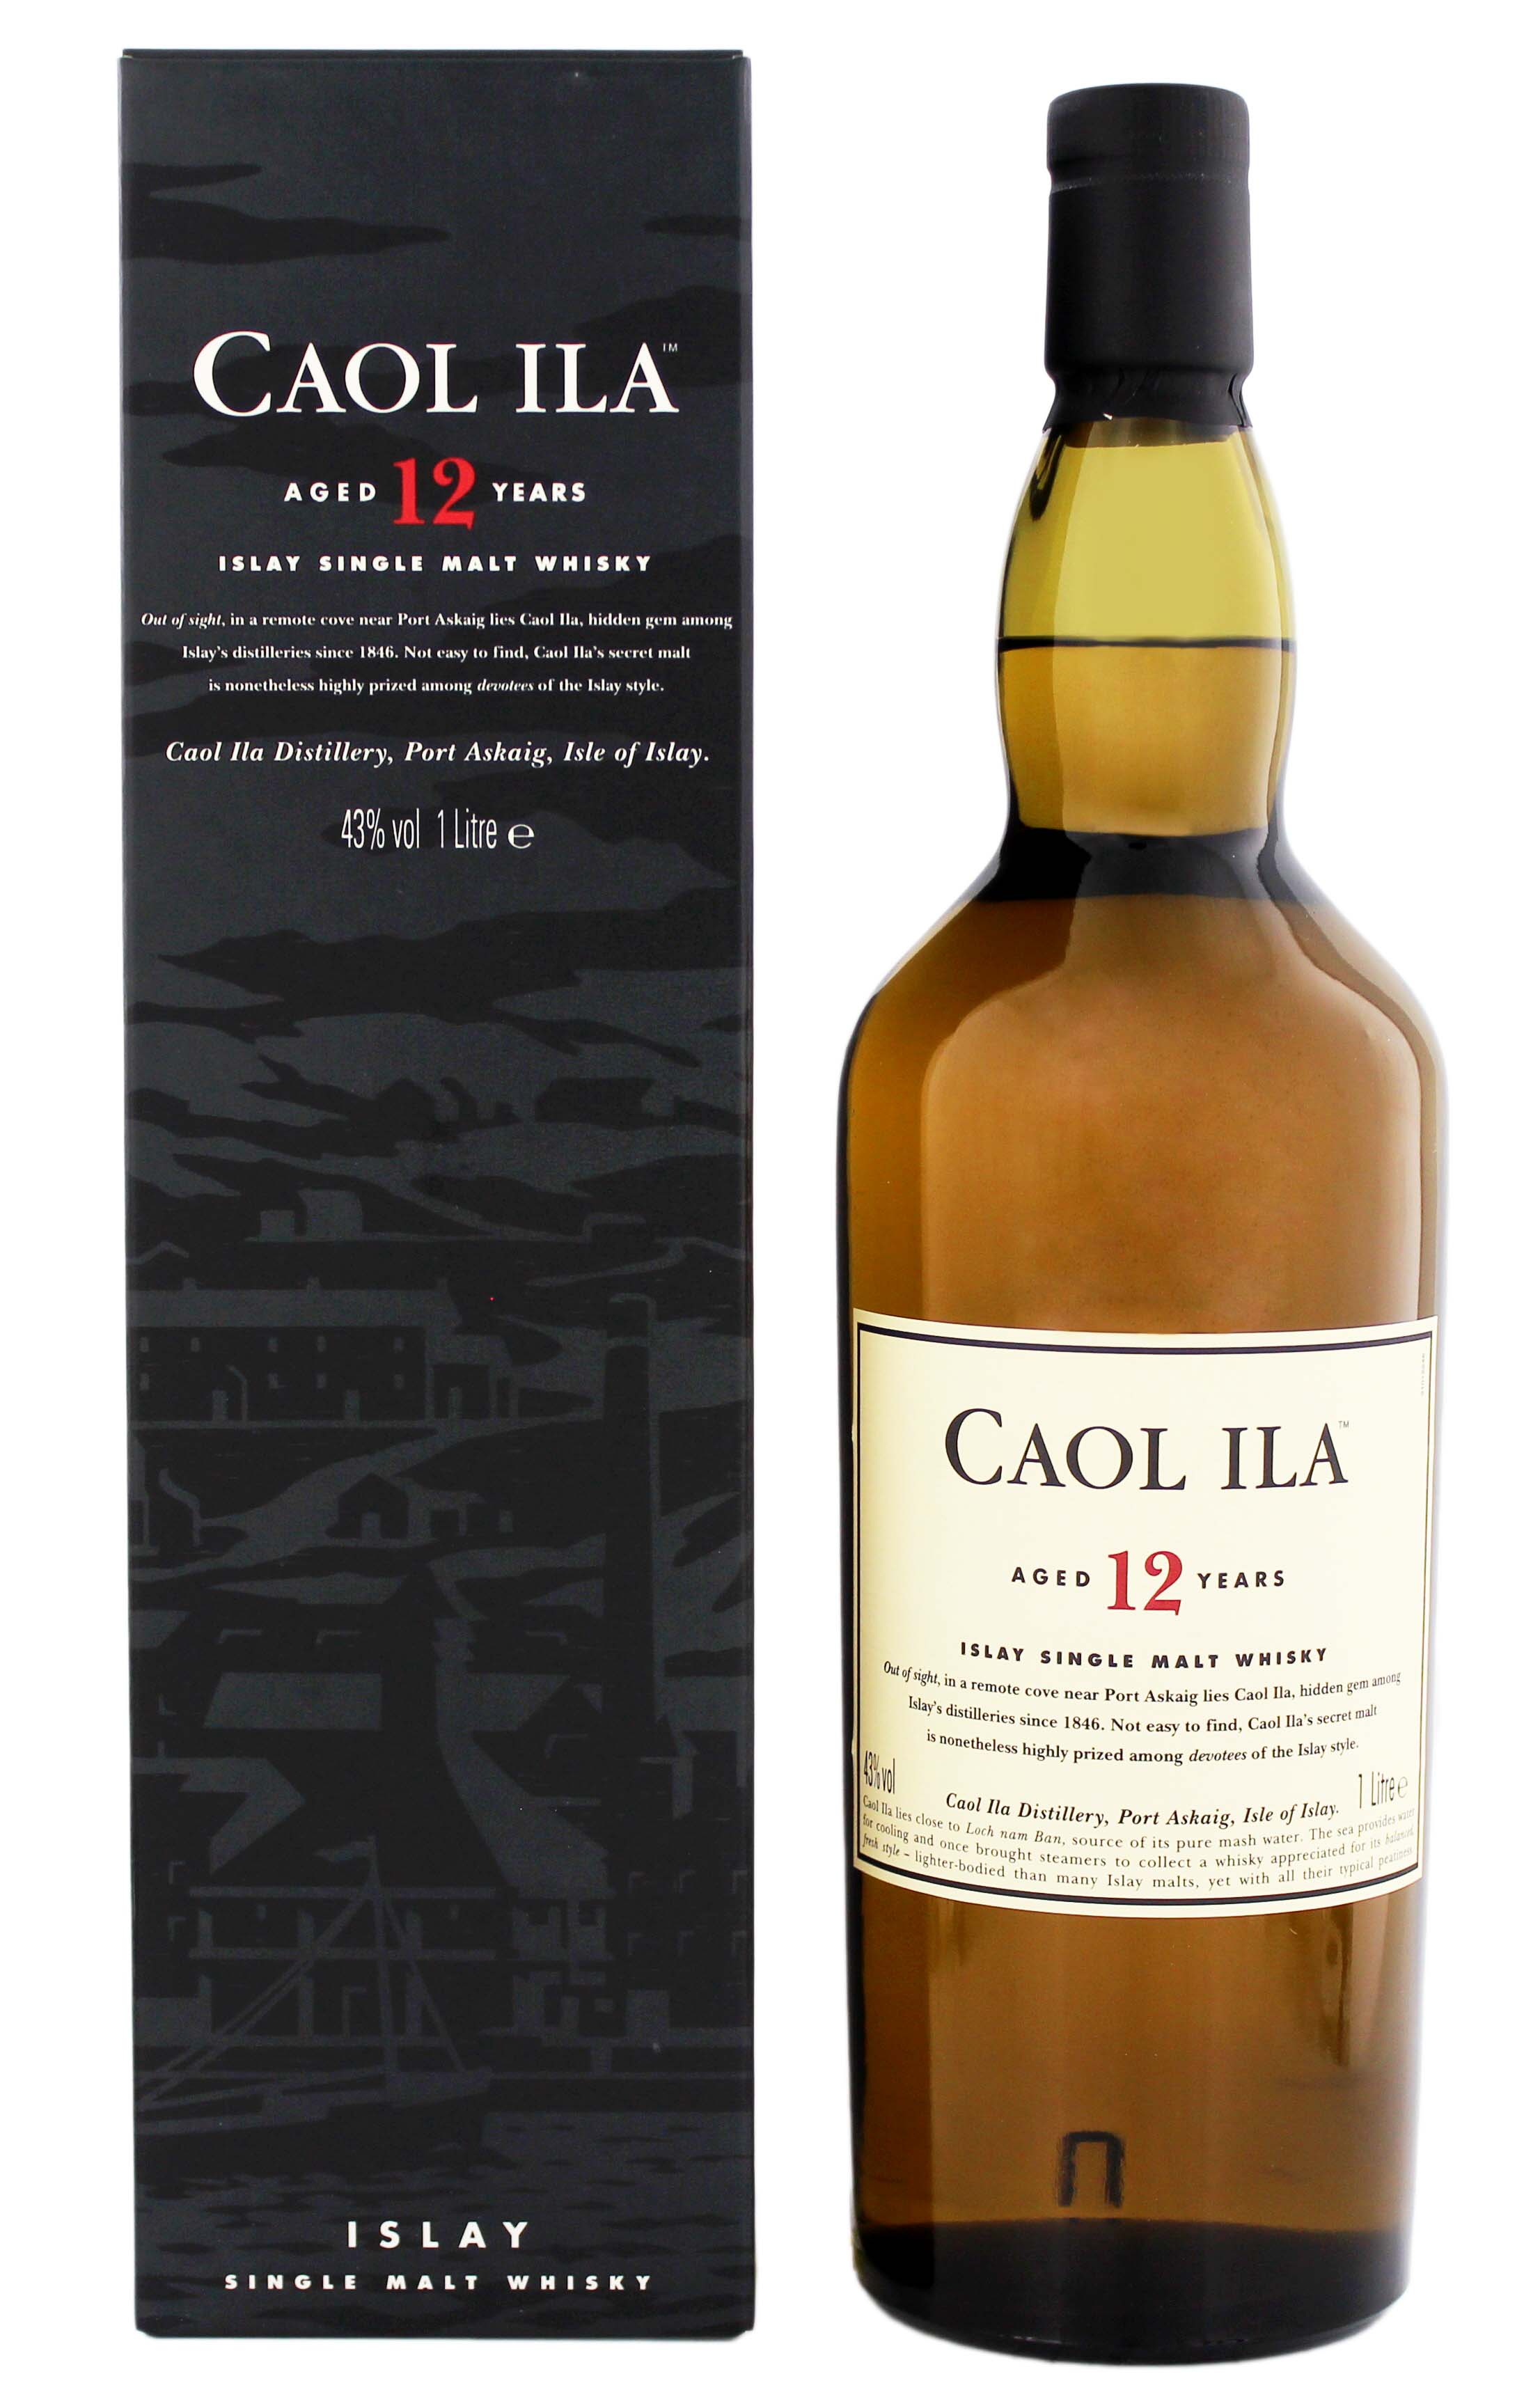 Caol Ila 12 Year Old Islay Single Malt Scotch Whisky